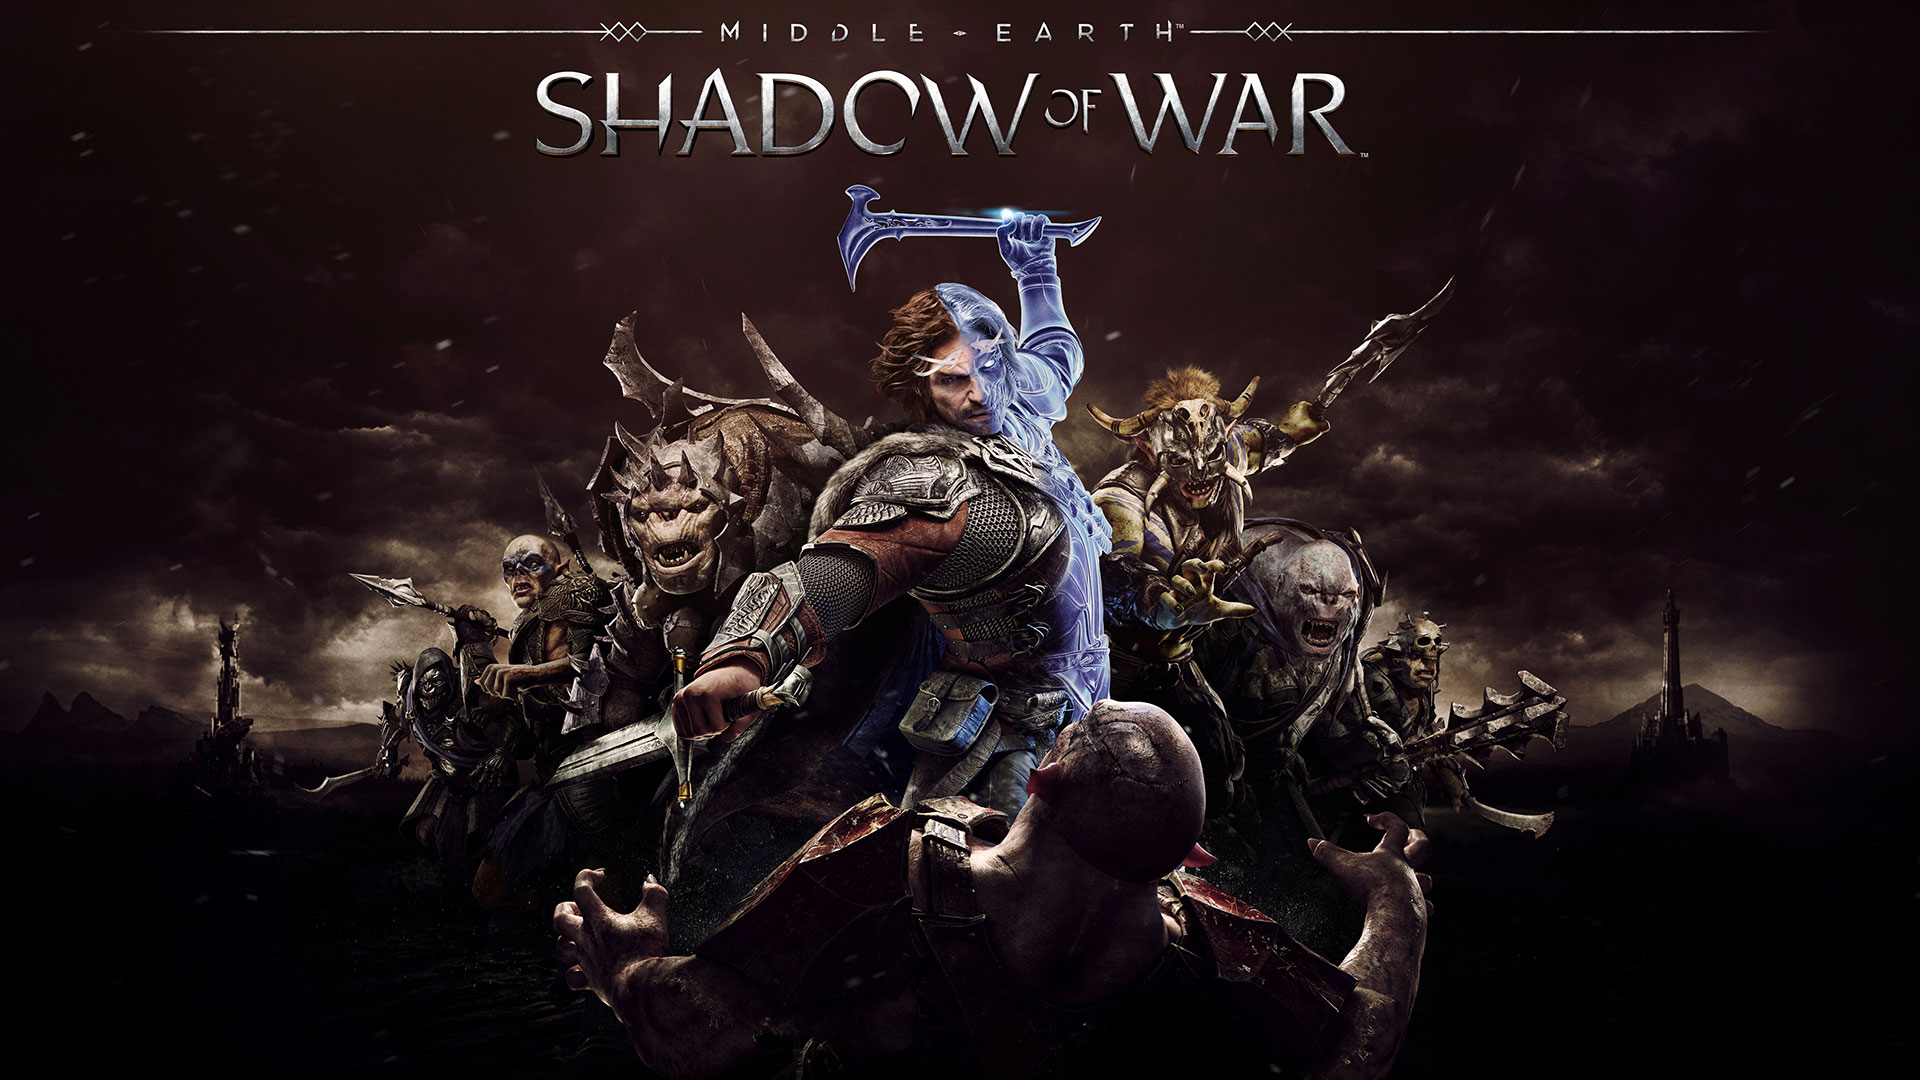 Middle-earth- Shadow of War Wallpapers in Ultra HD | 4K - Gameranx